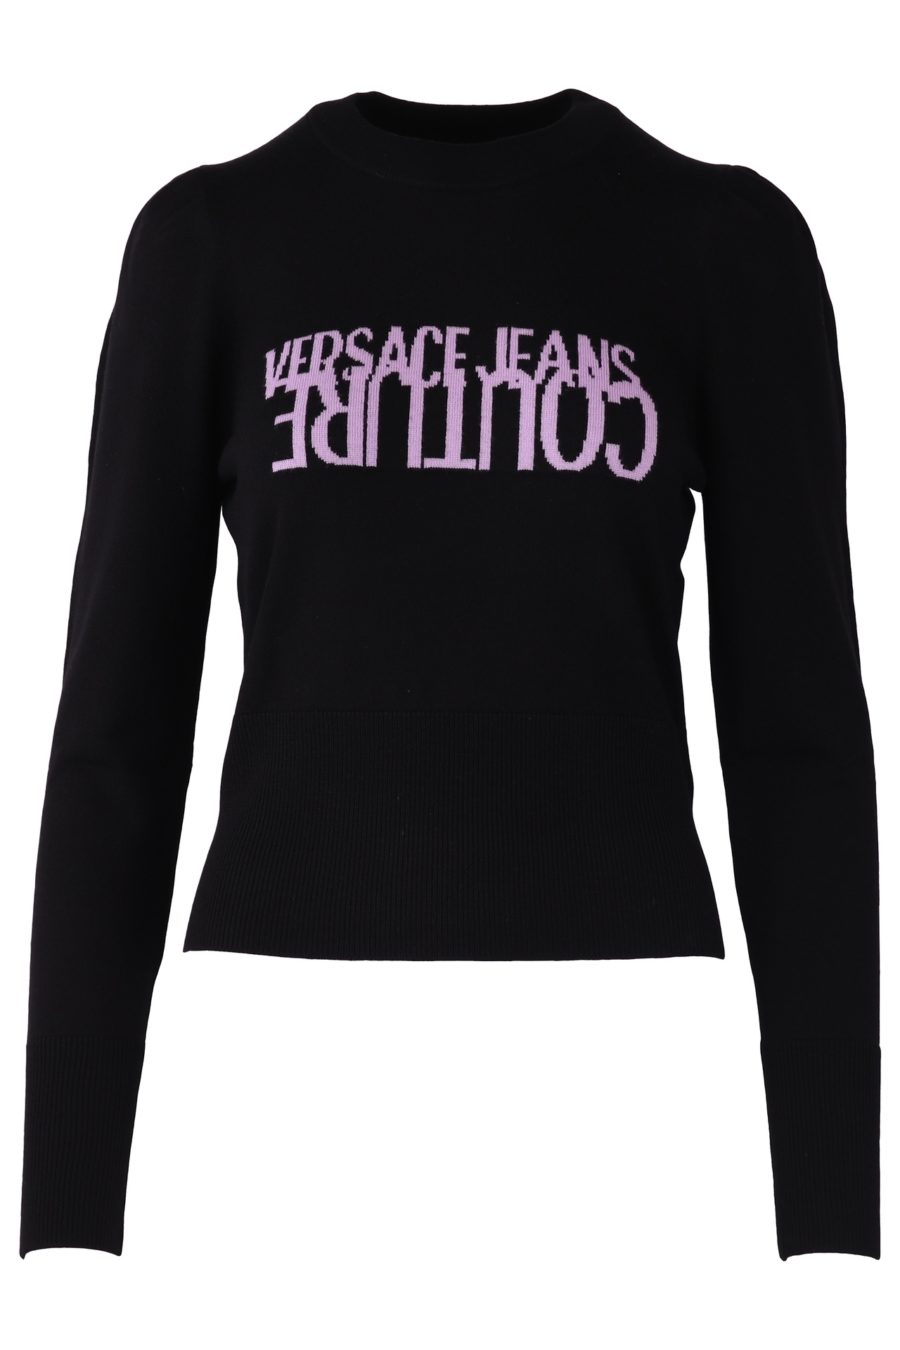 Jersey Versace Jeans Couture negra con logo morado - 4536ecd8f2c69c35c5b843cd02a463d51ae7d89c